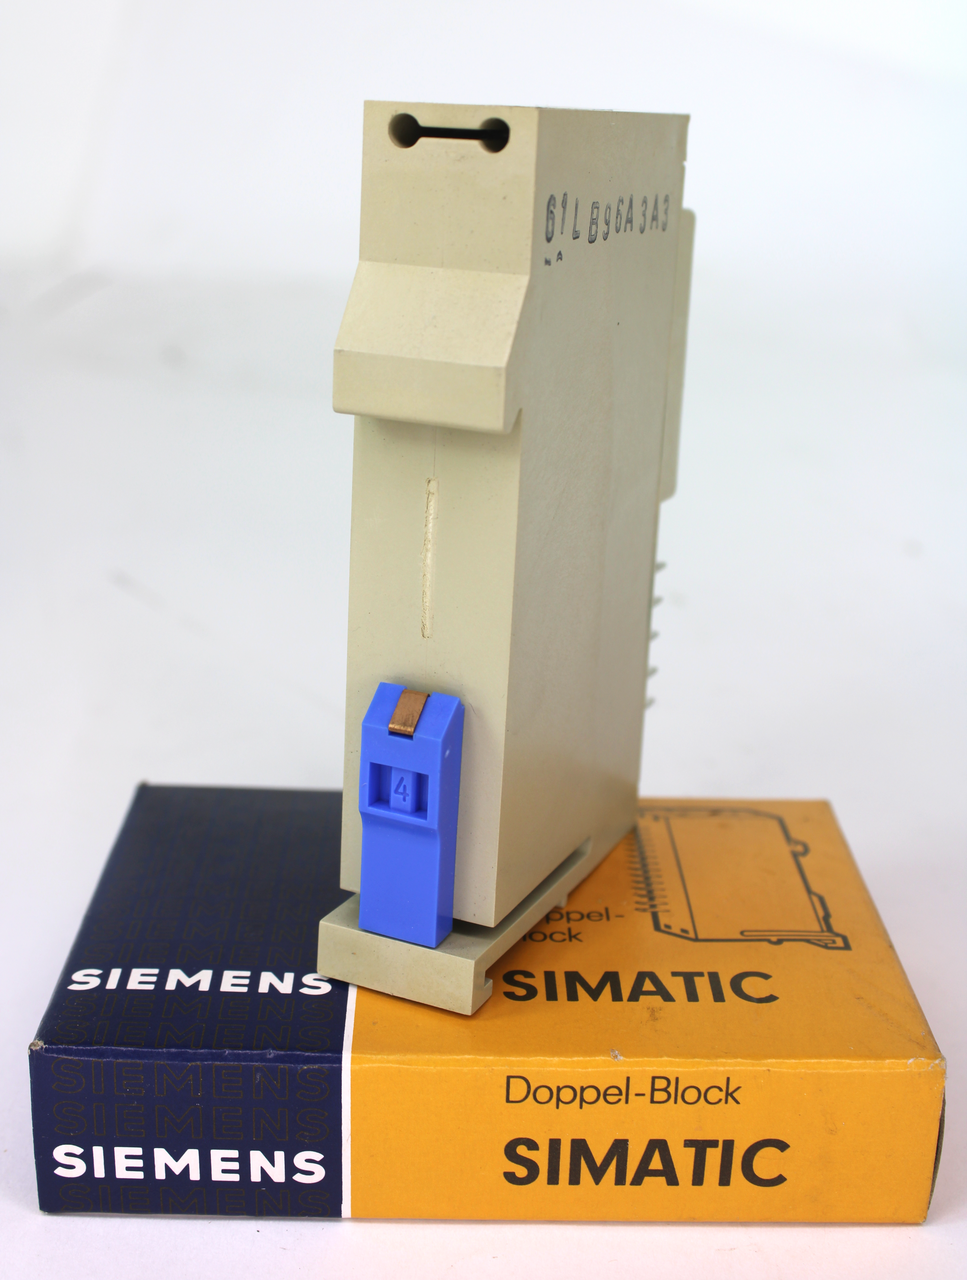 Siemens Simatic 6EC1-873-3A Doppel Block New